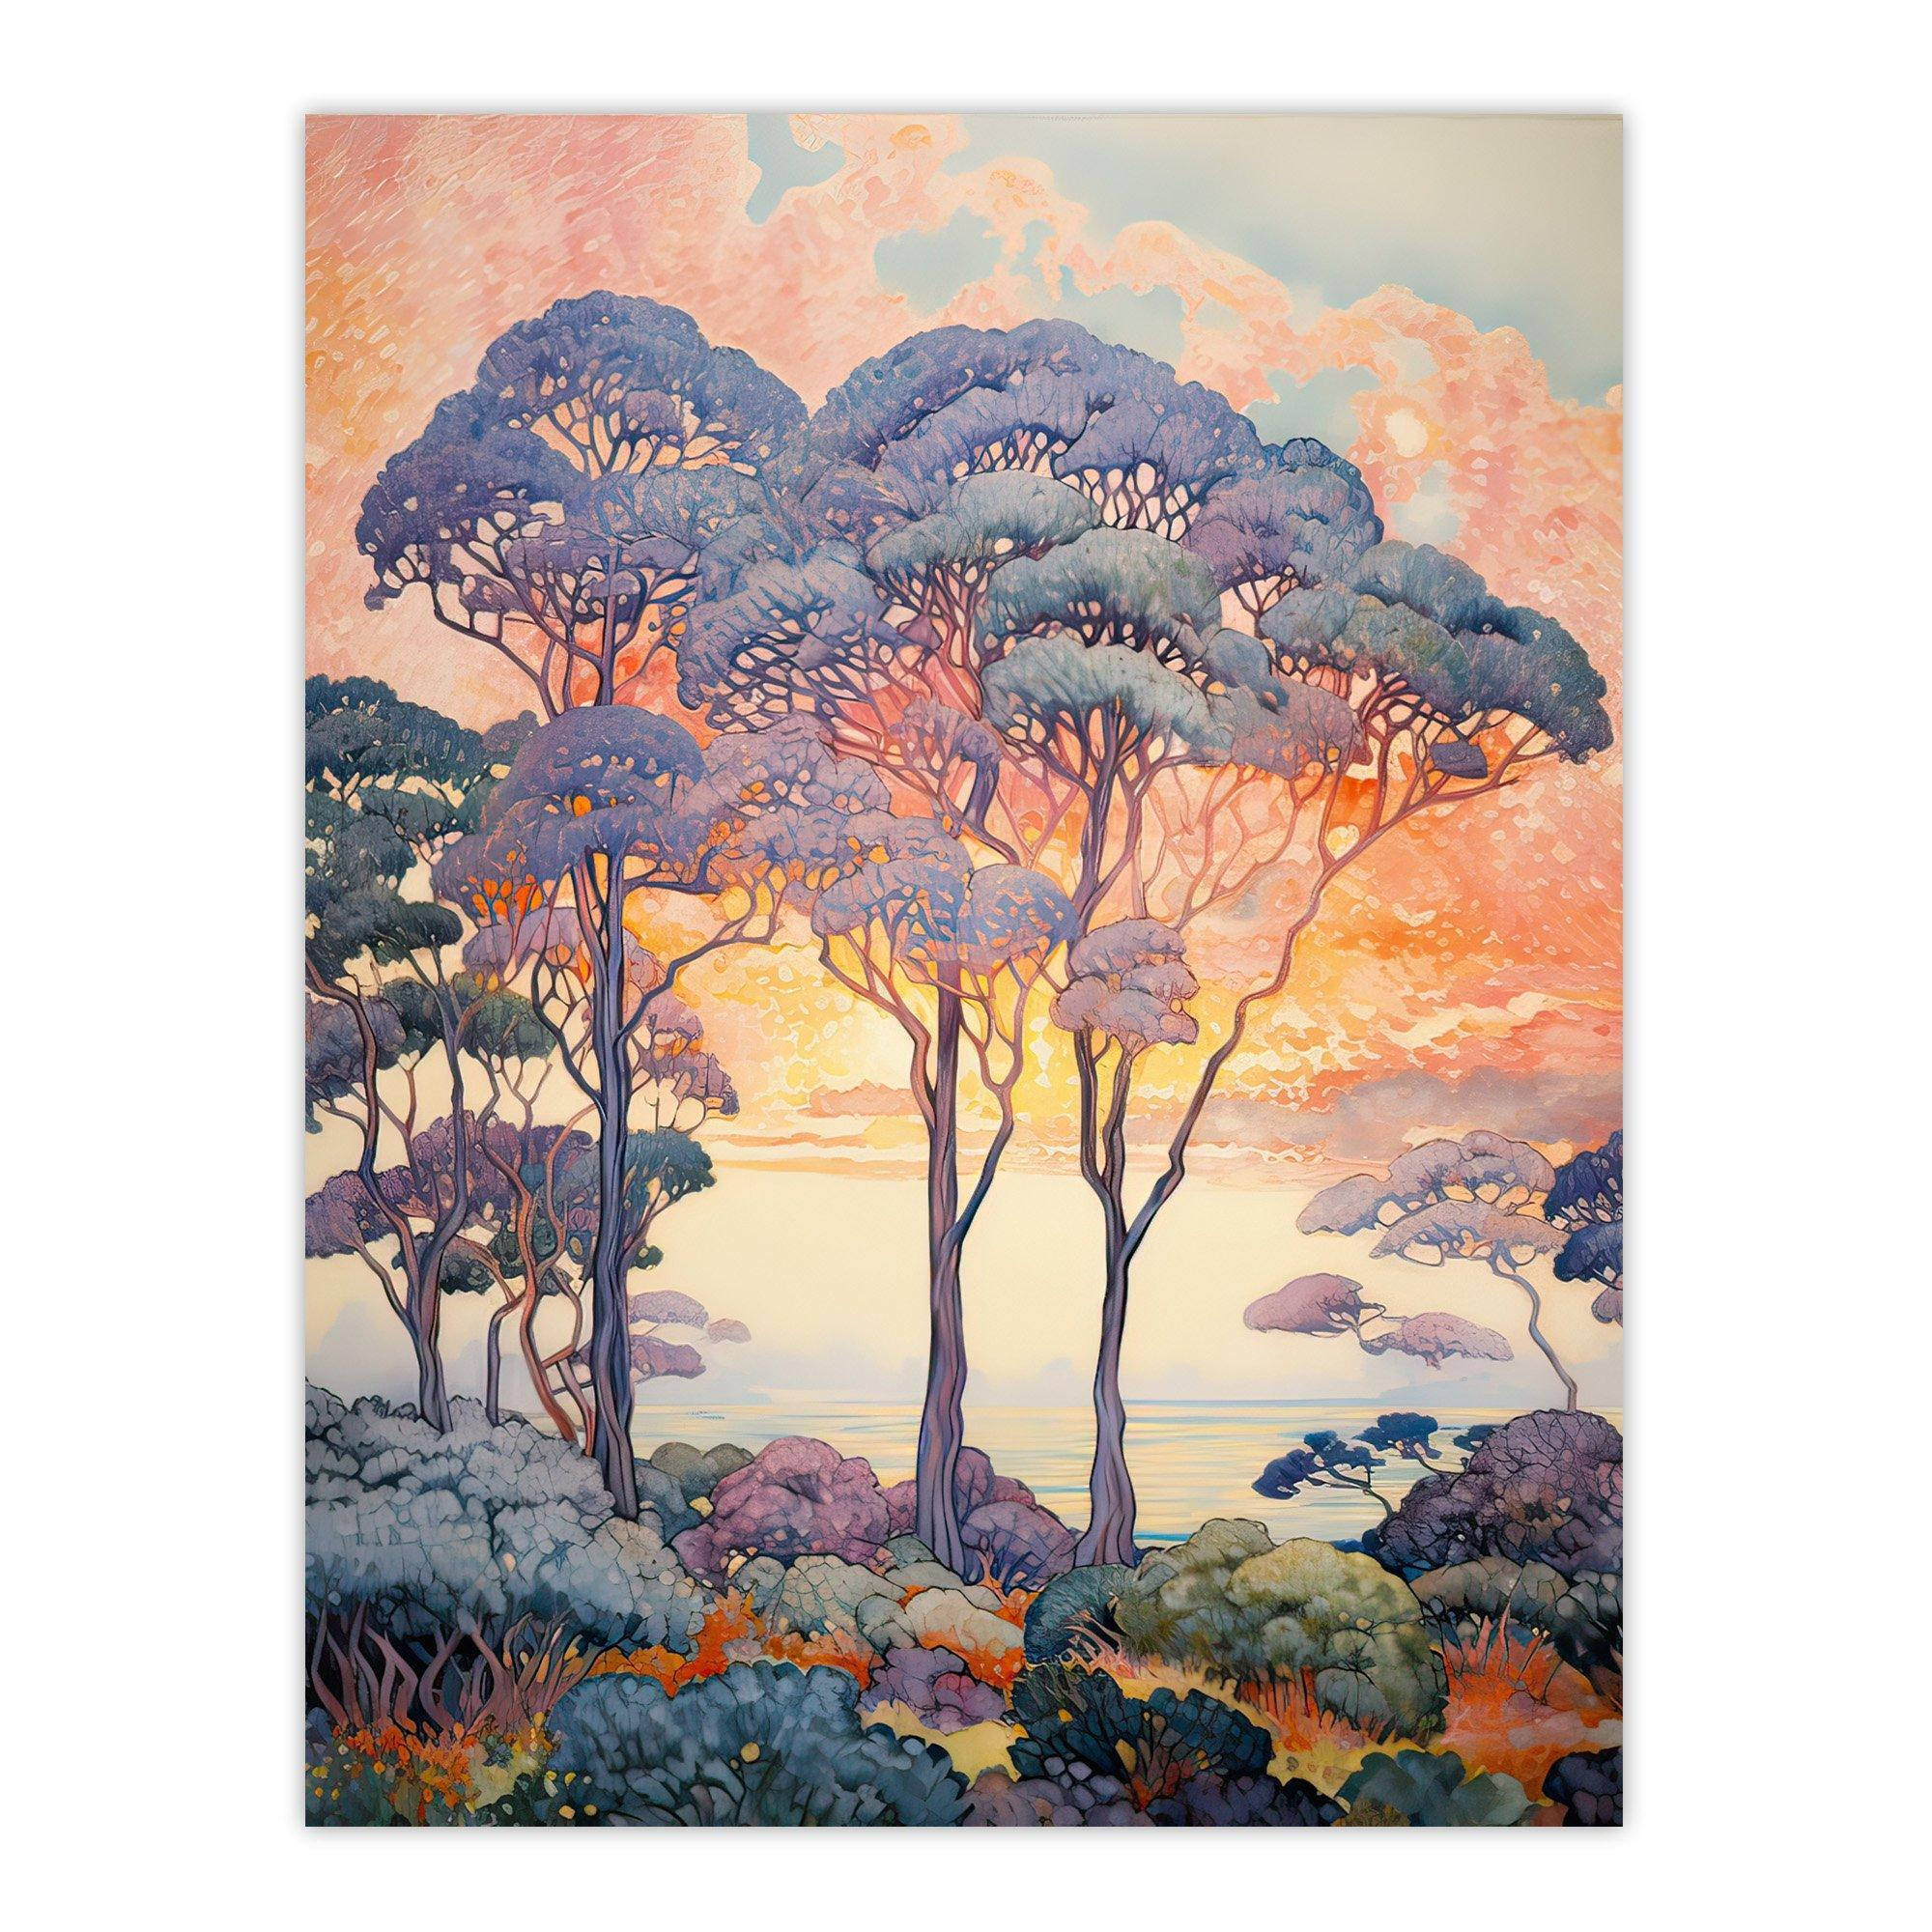 Coastal Sunrise Behind Trees Orange Blue Purple Wall Art Poster Print Picture - image 1